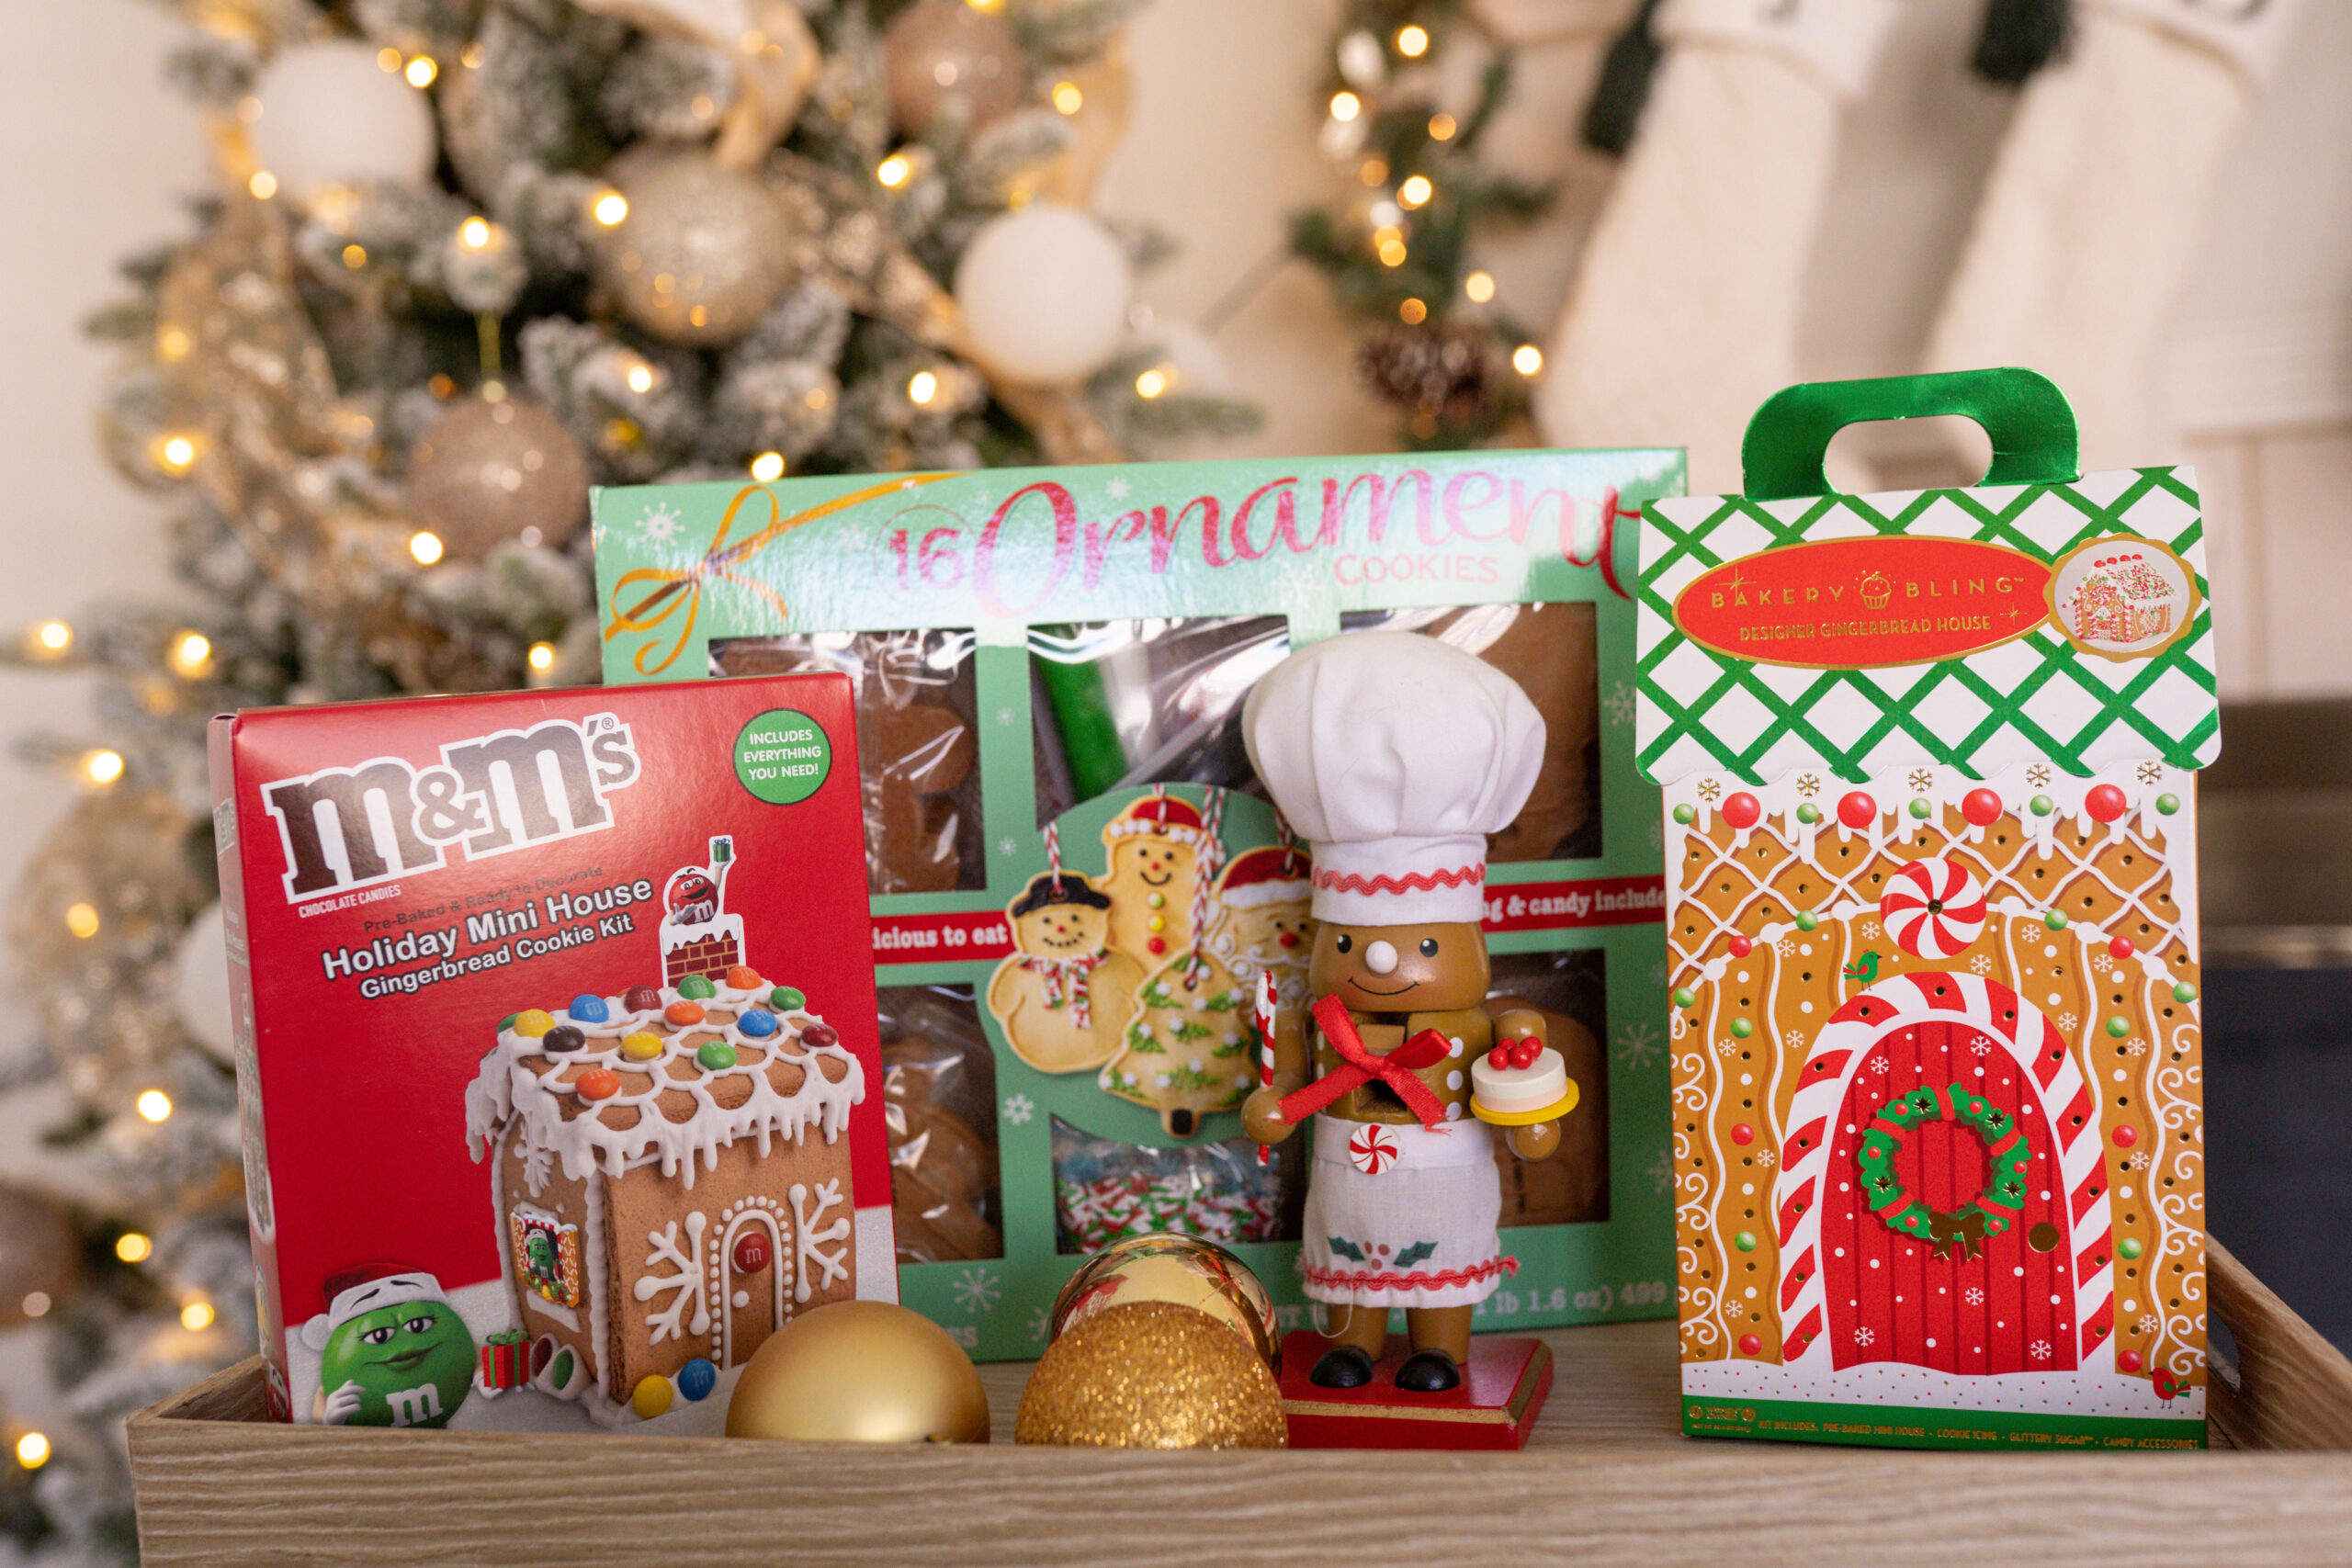 Family Christmas Decorating Kits, gingerbread house, Christmas cookies, Christmas traditions.